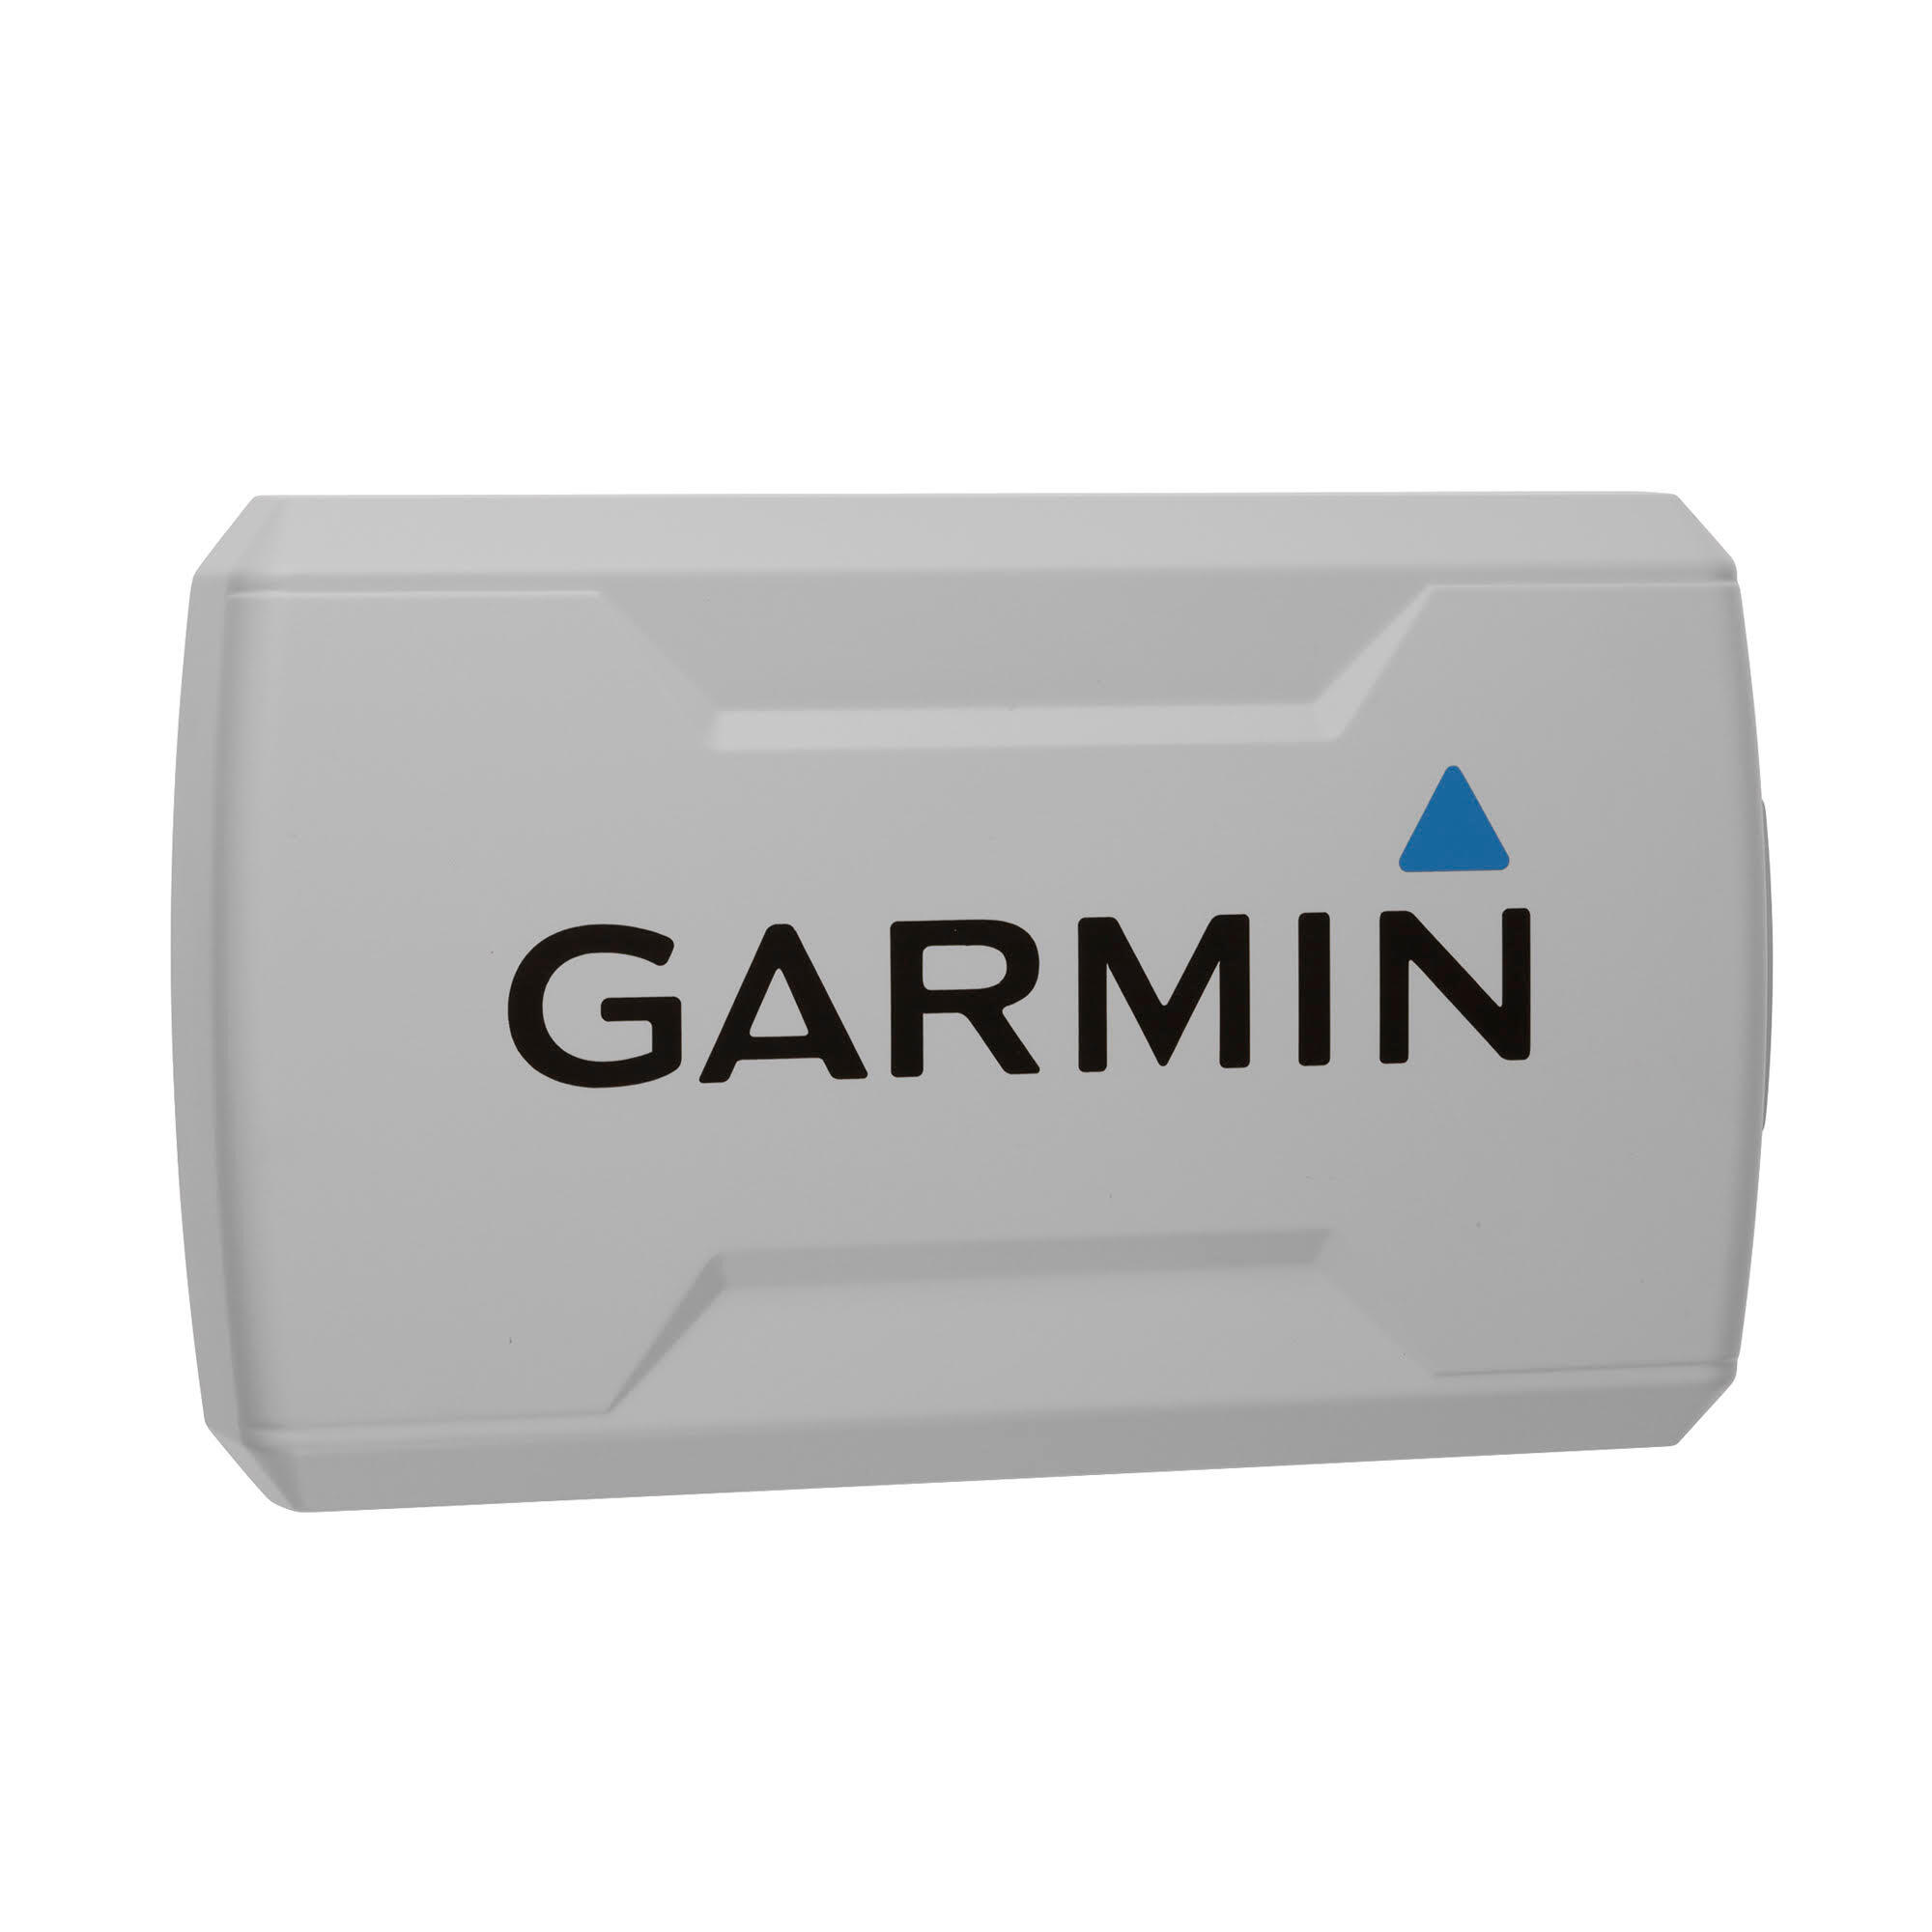 Carp fishing protective cover for Garmin Striker 5 plus sonar 1/2